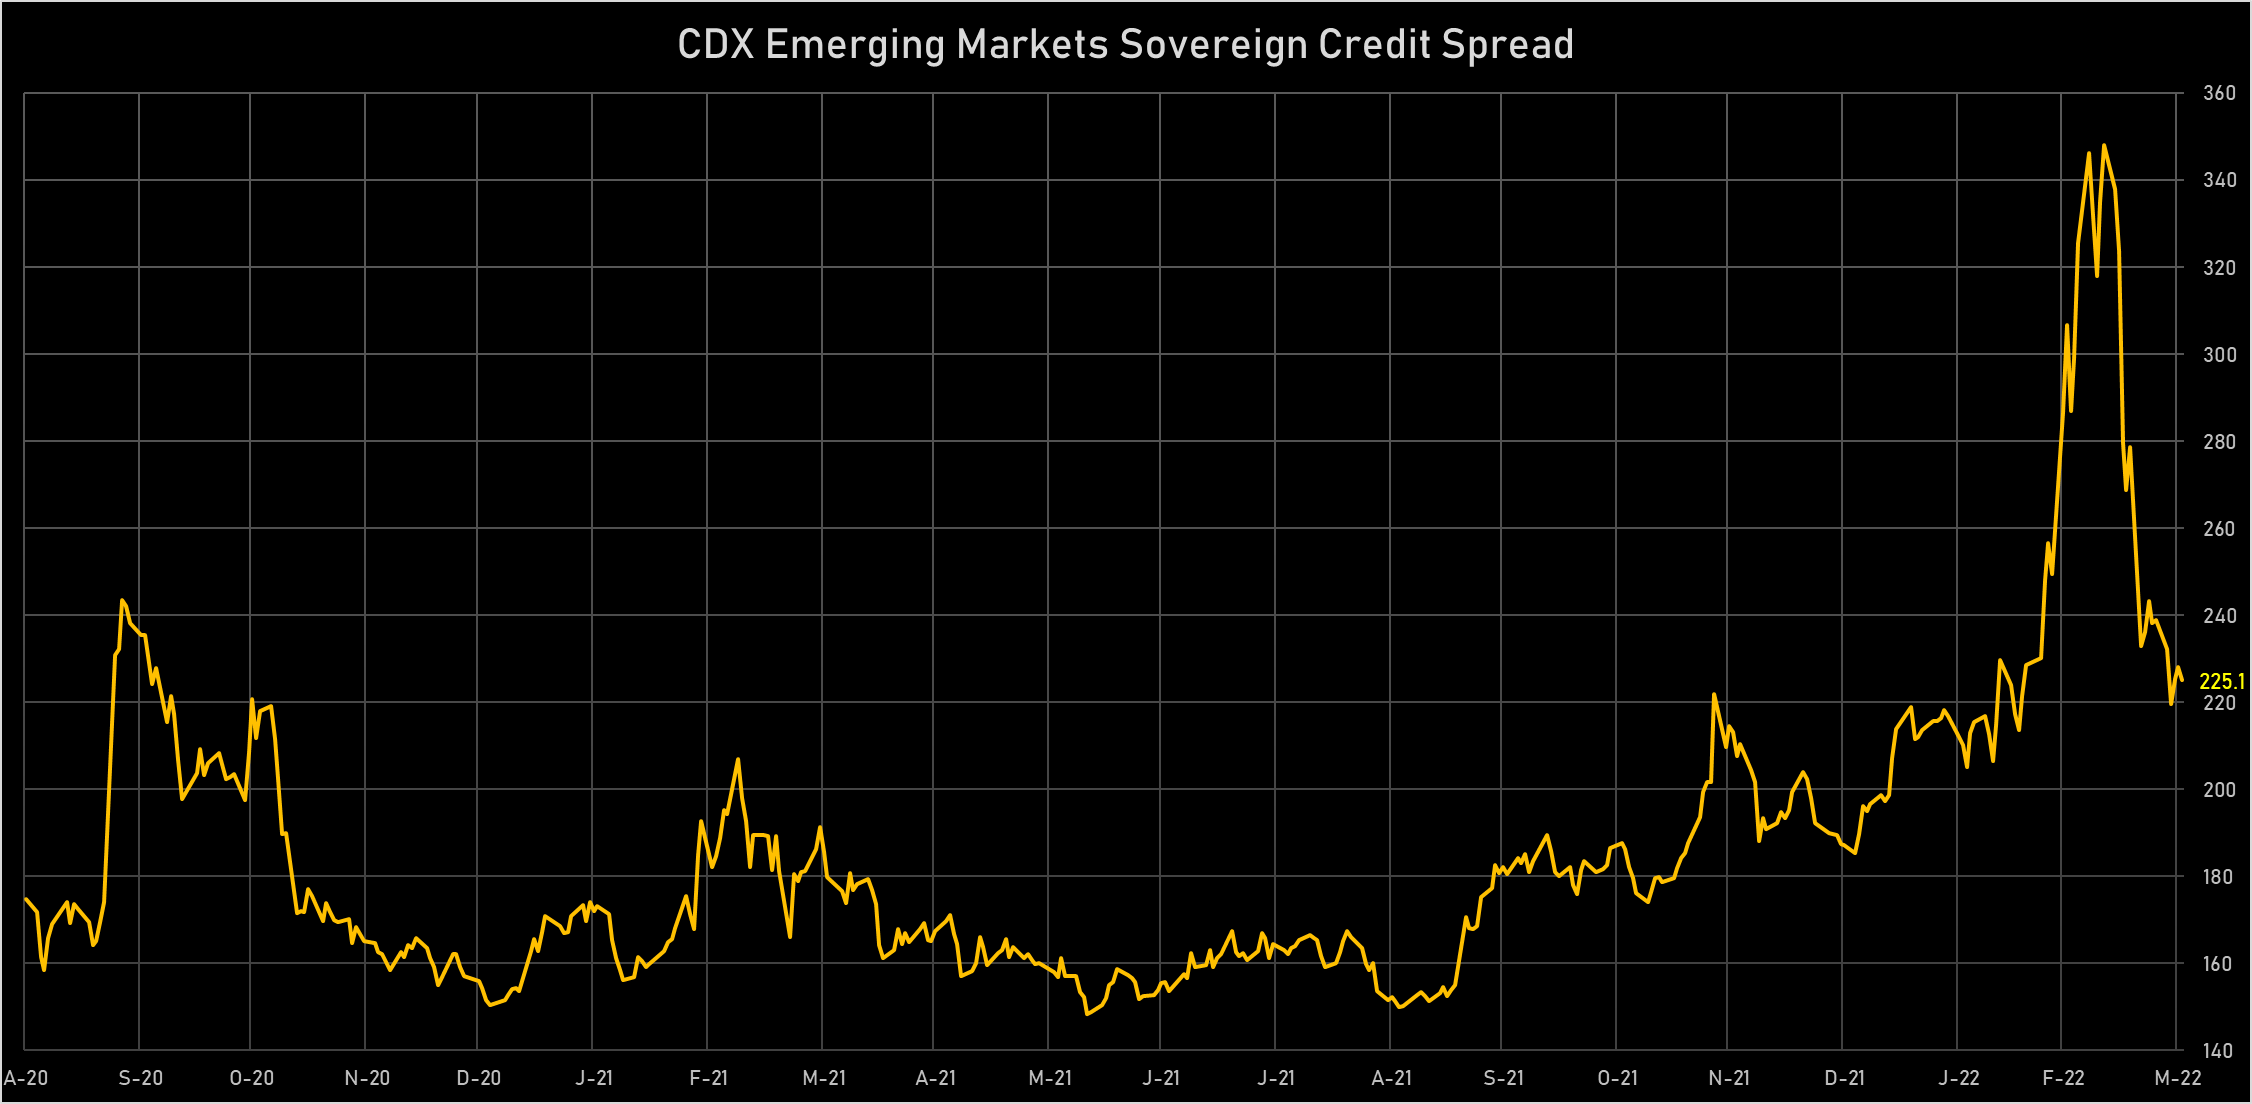 CDX EM 5Y Sovereign Credit Spread | Sources: phipost.com, Refinitiv data 